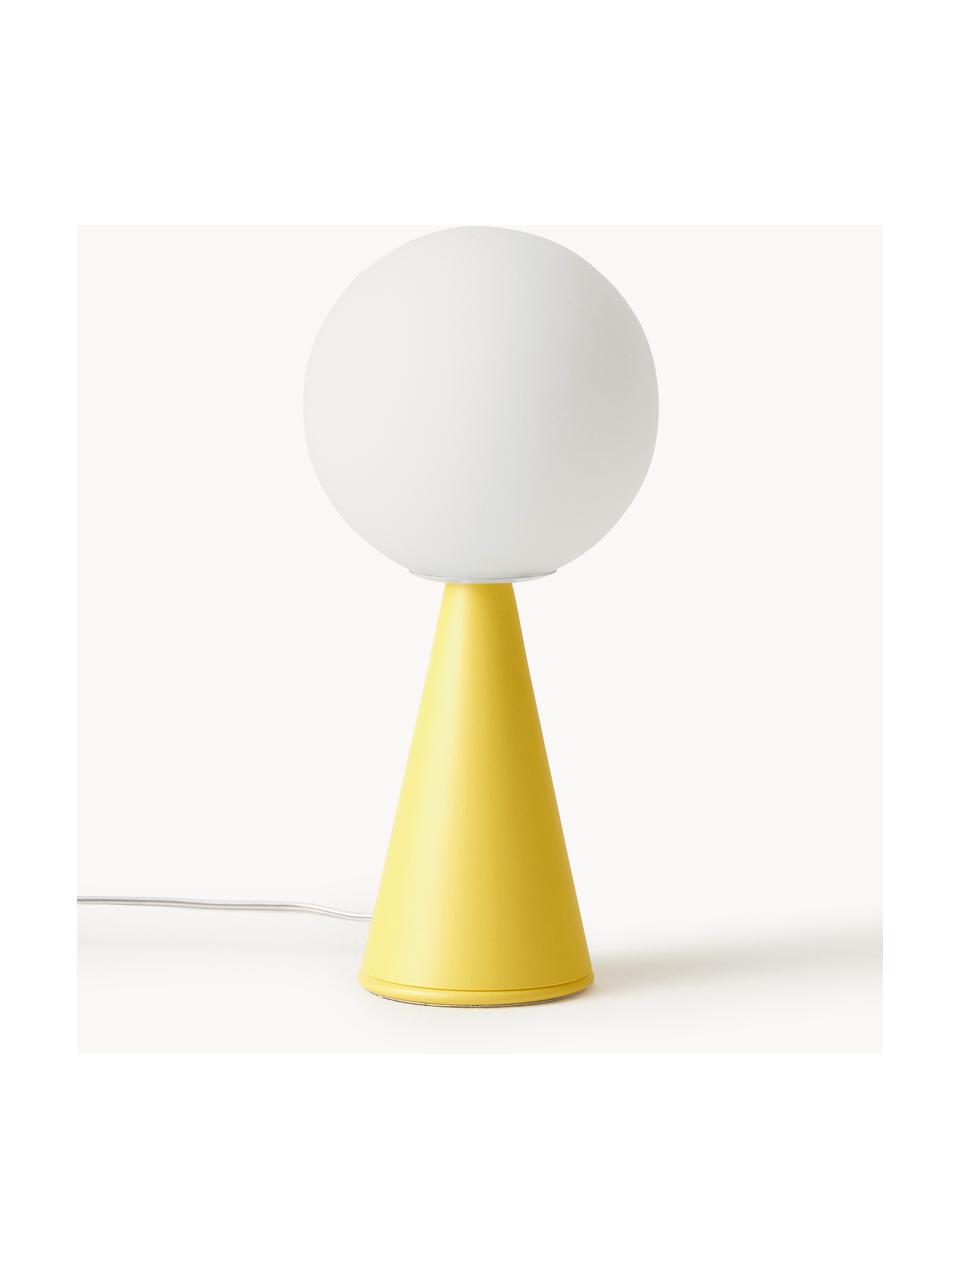 Petite lampe à poser artisanale Bilia, Blanc, jaune citron, Ø 12 x haut. 26 cm